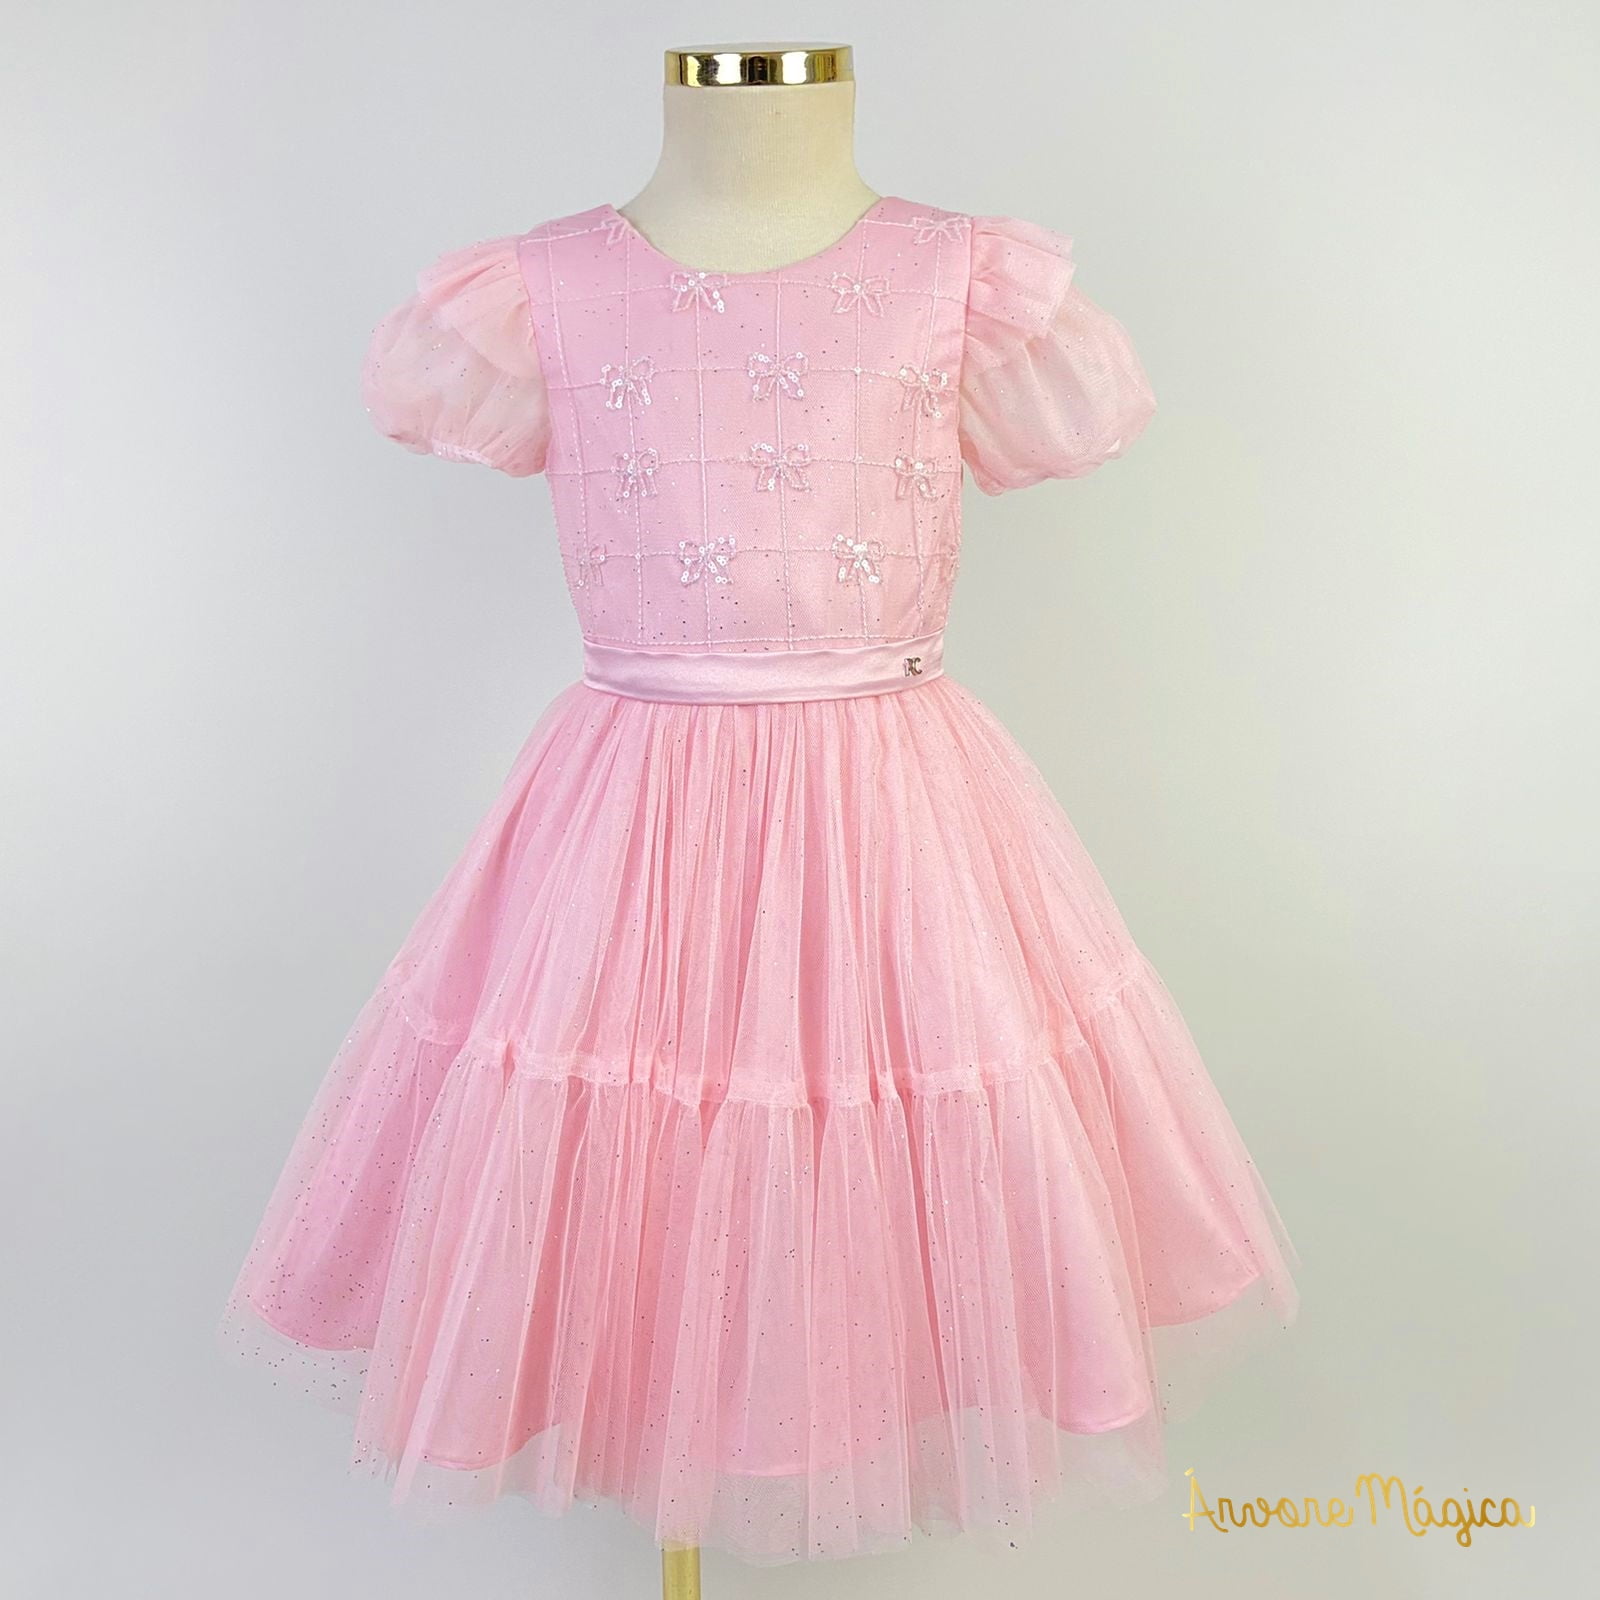 Vestido de Festa Infantil Rosa Glitter Laços Bordados Petit Cherie